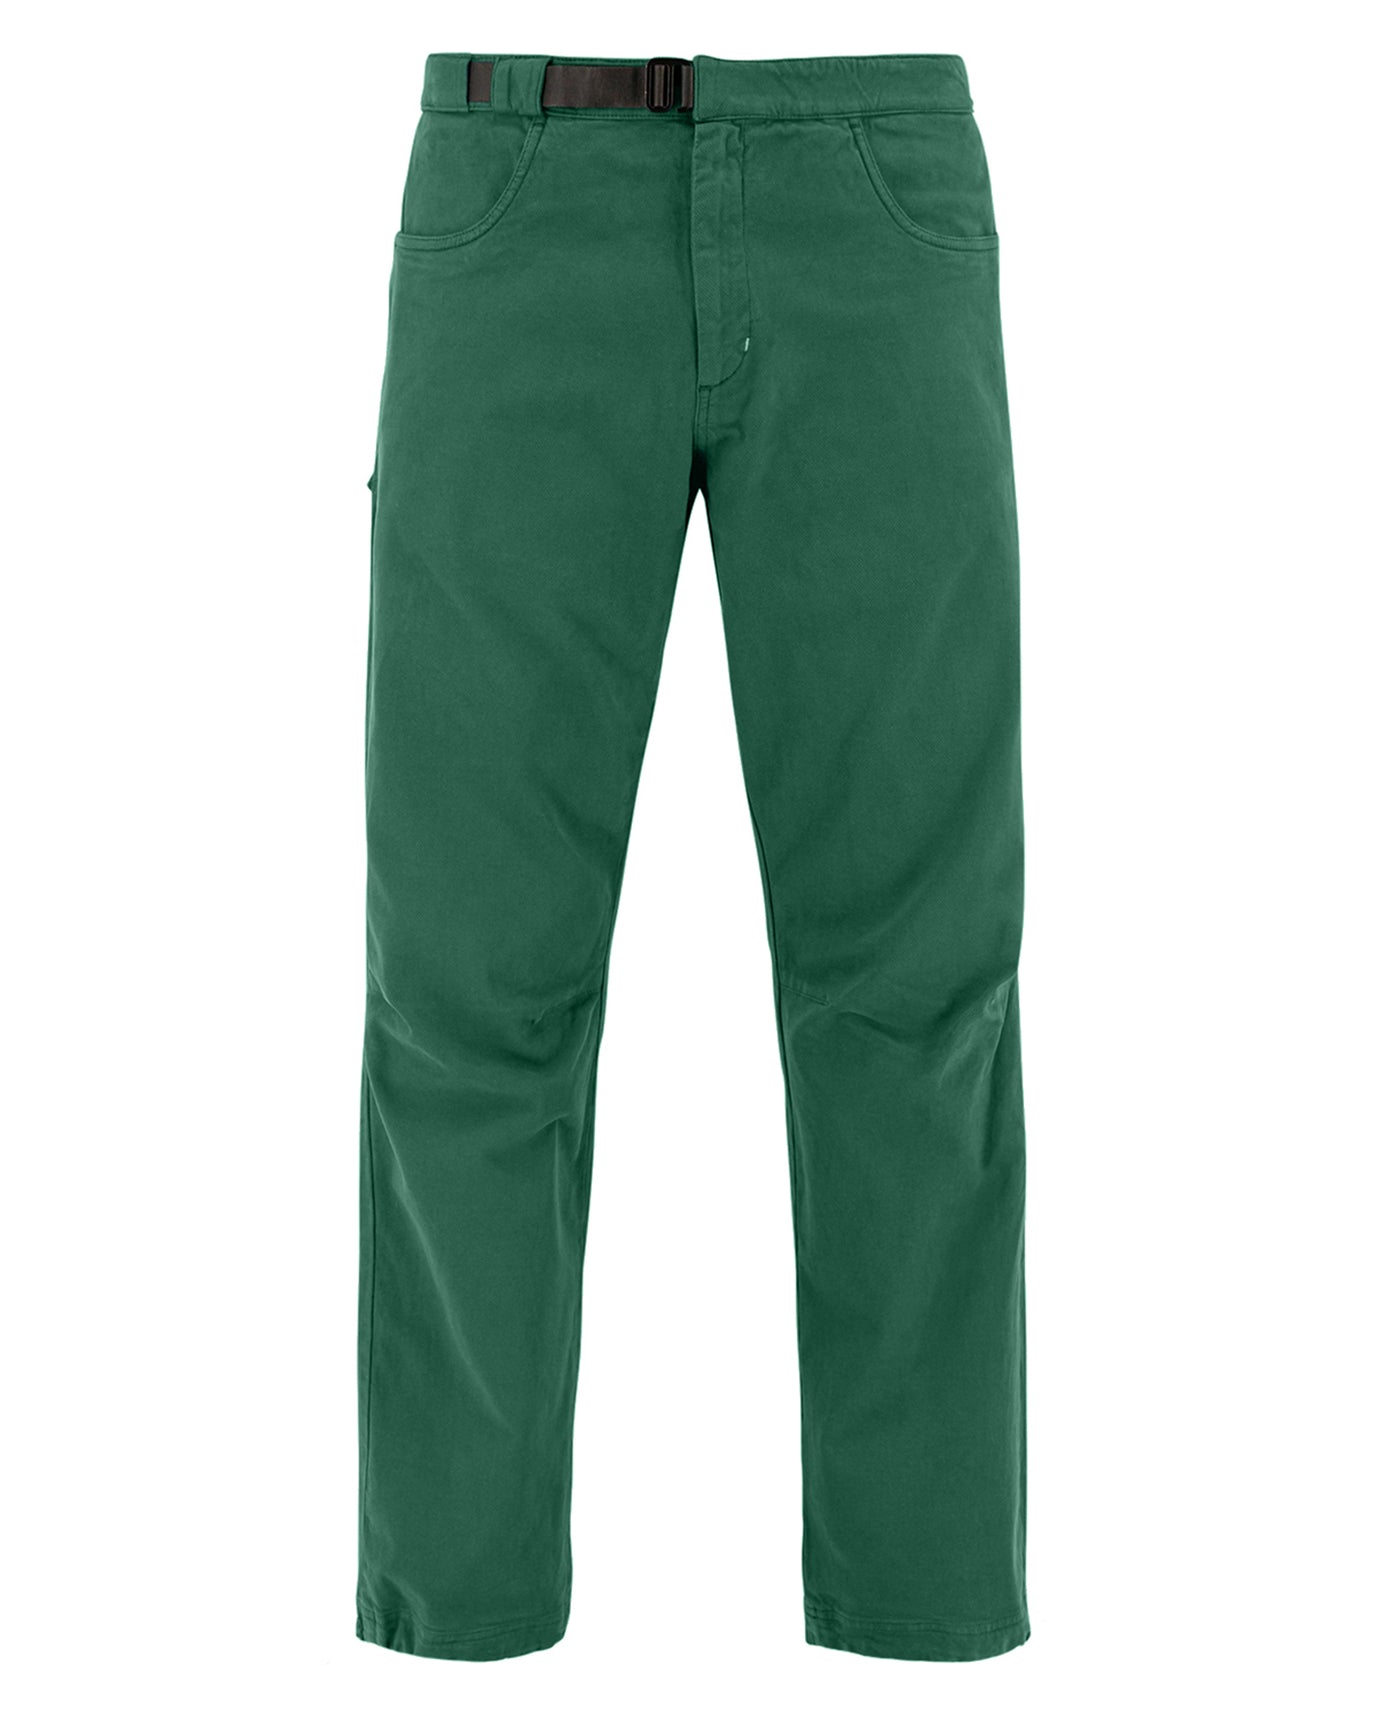 Men's Universum Pants Green